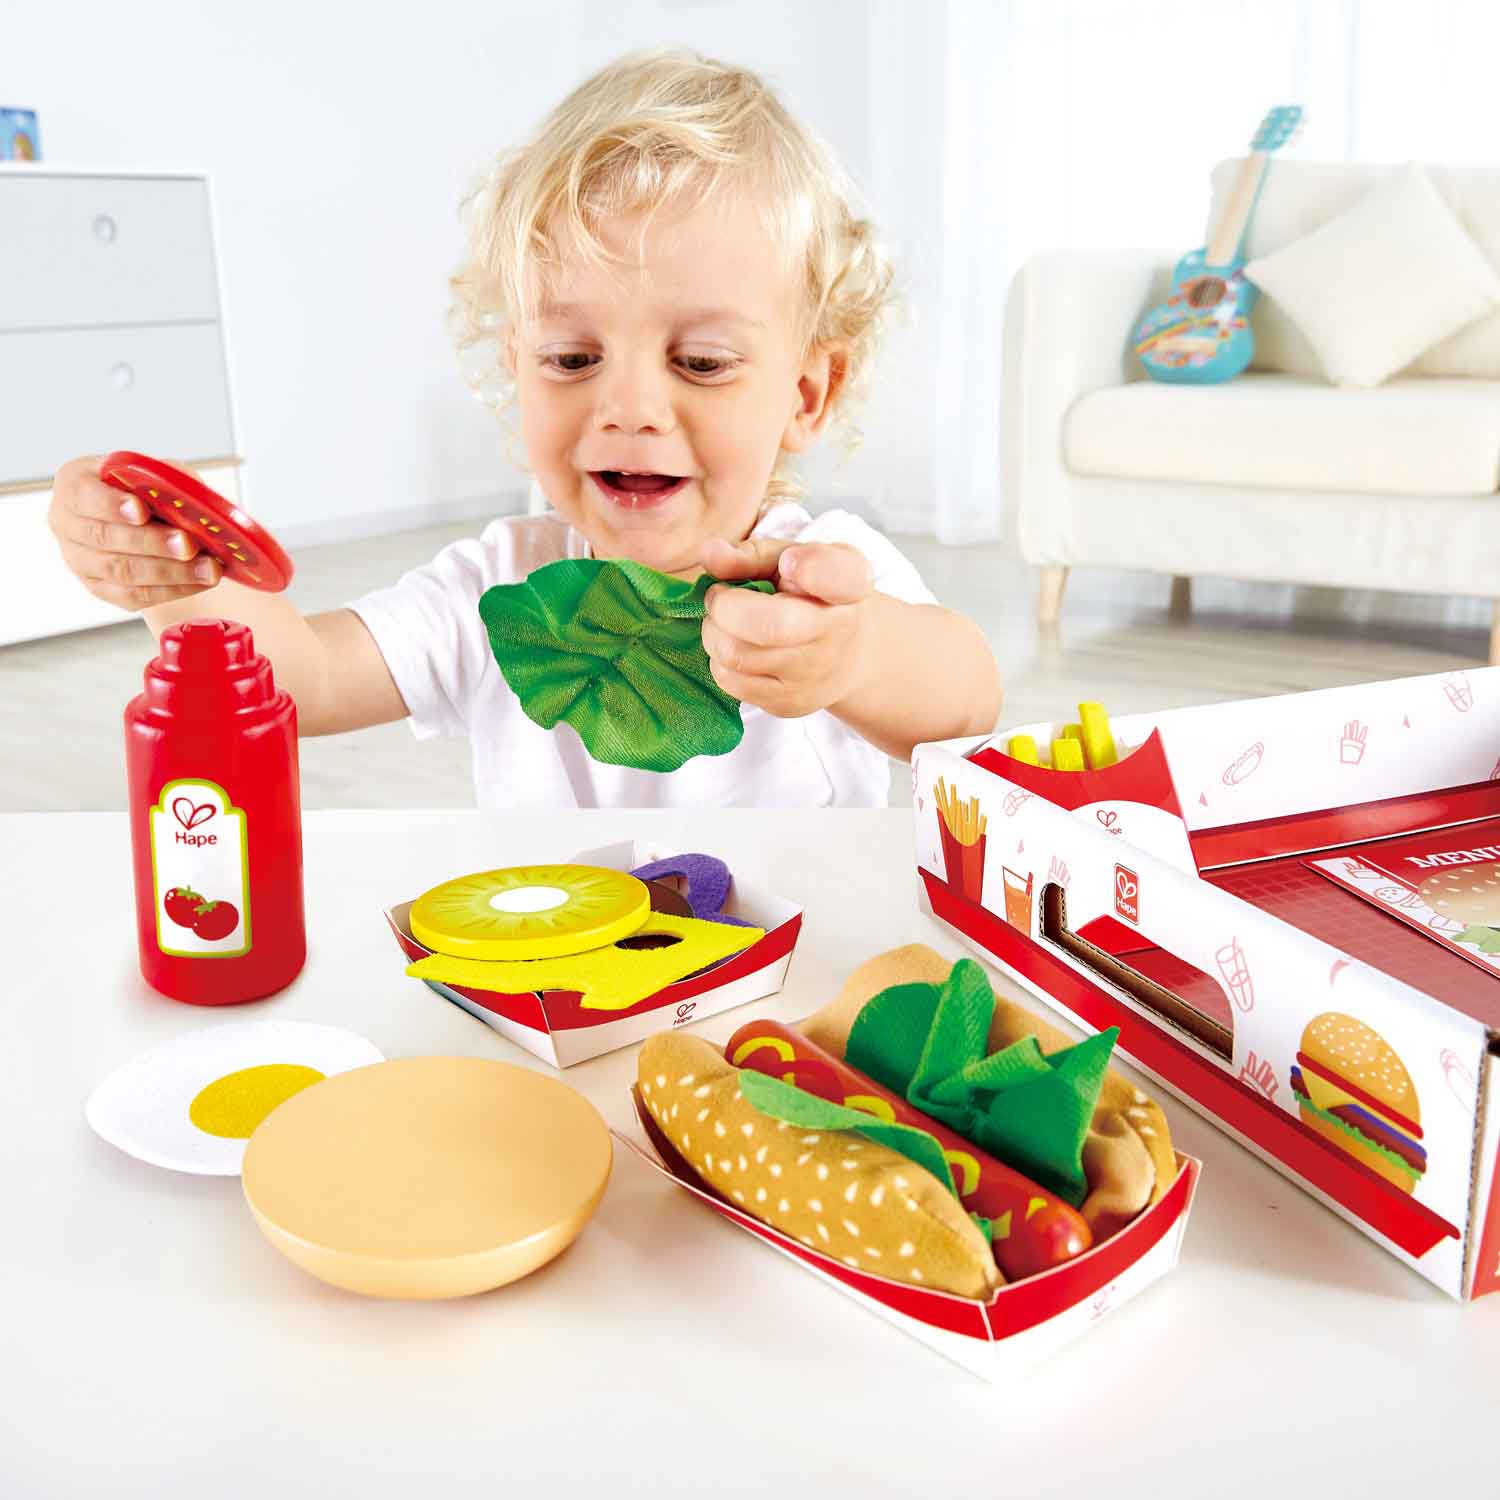 Playmobil Add-On Series - Fast Food Restaurant